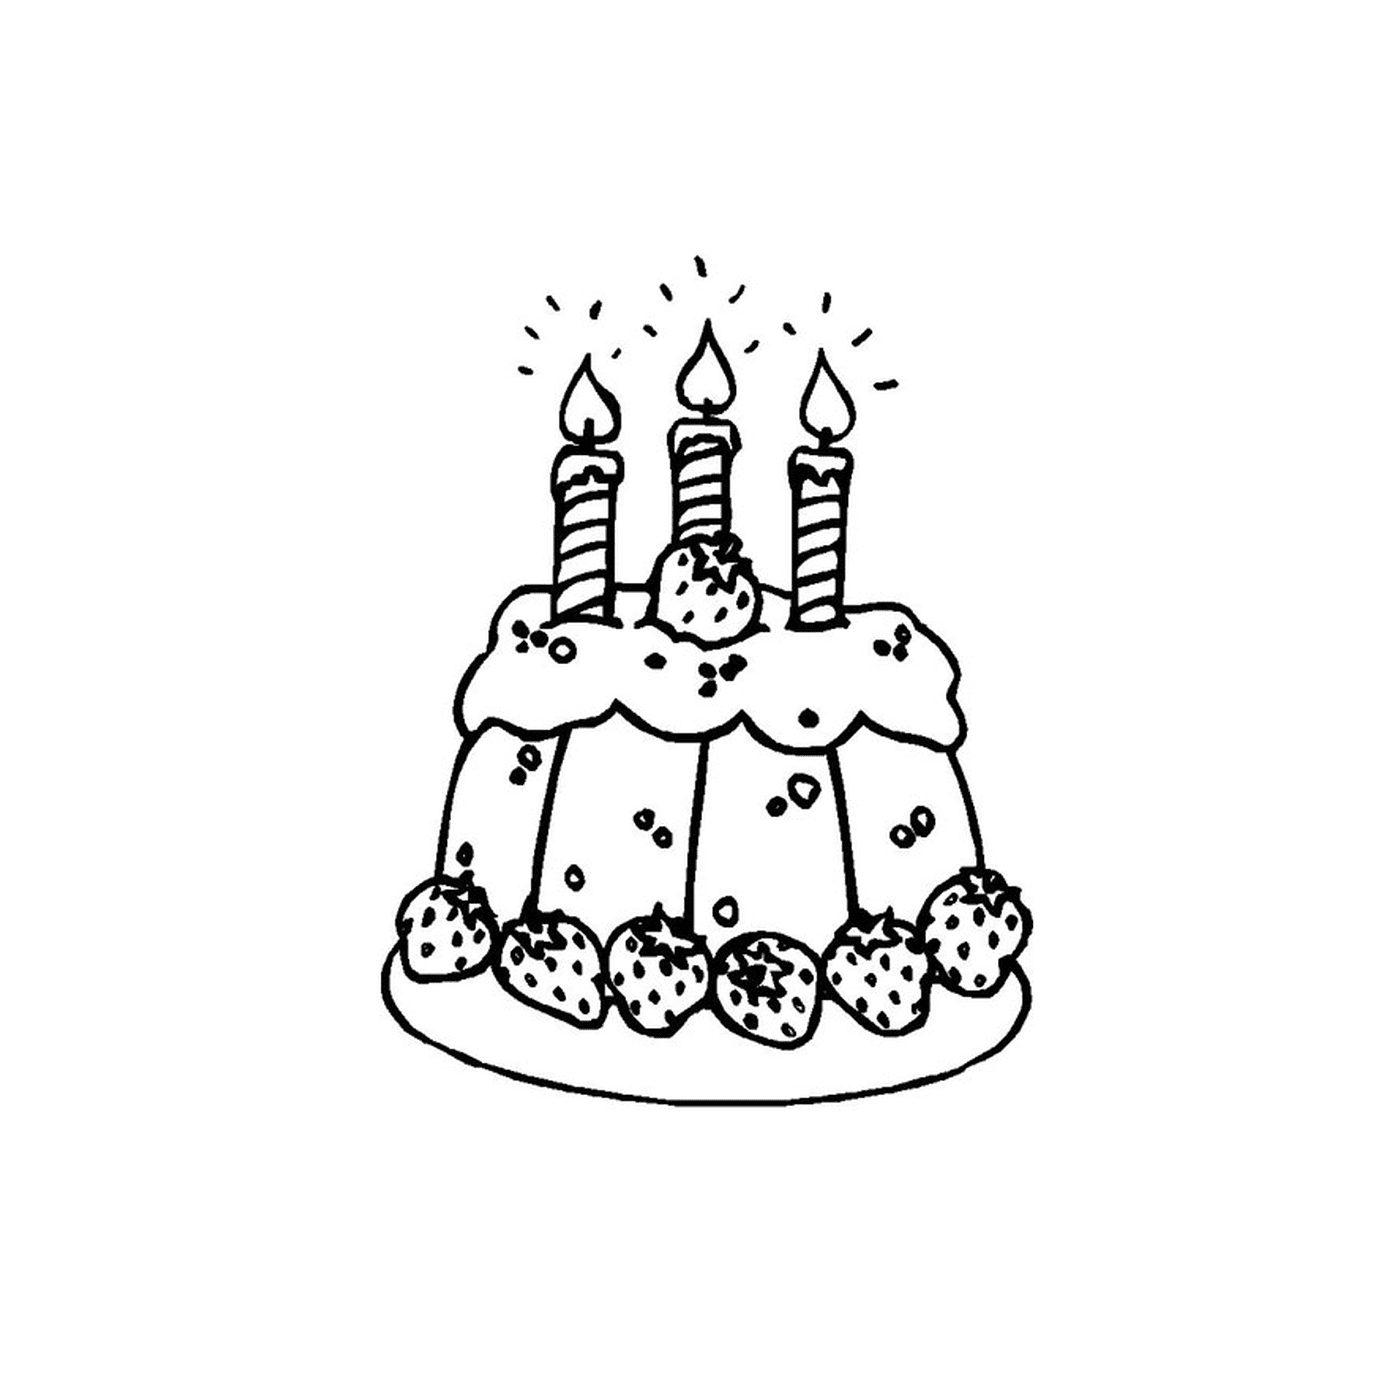  una torta con tre candele accese 